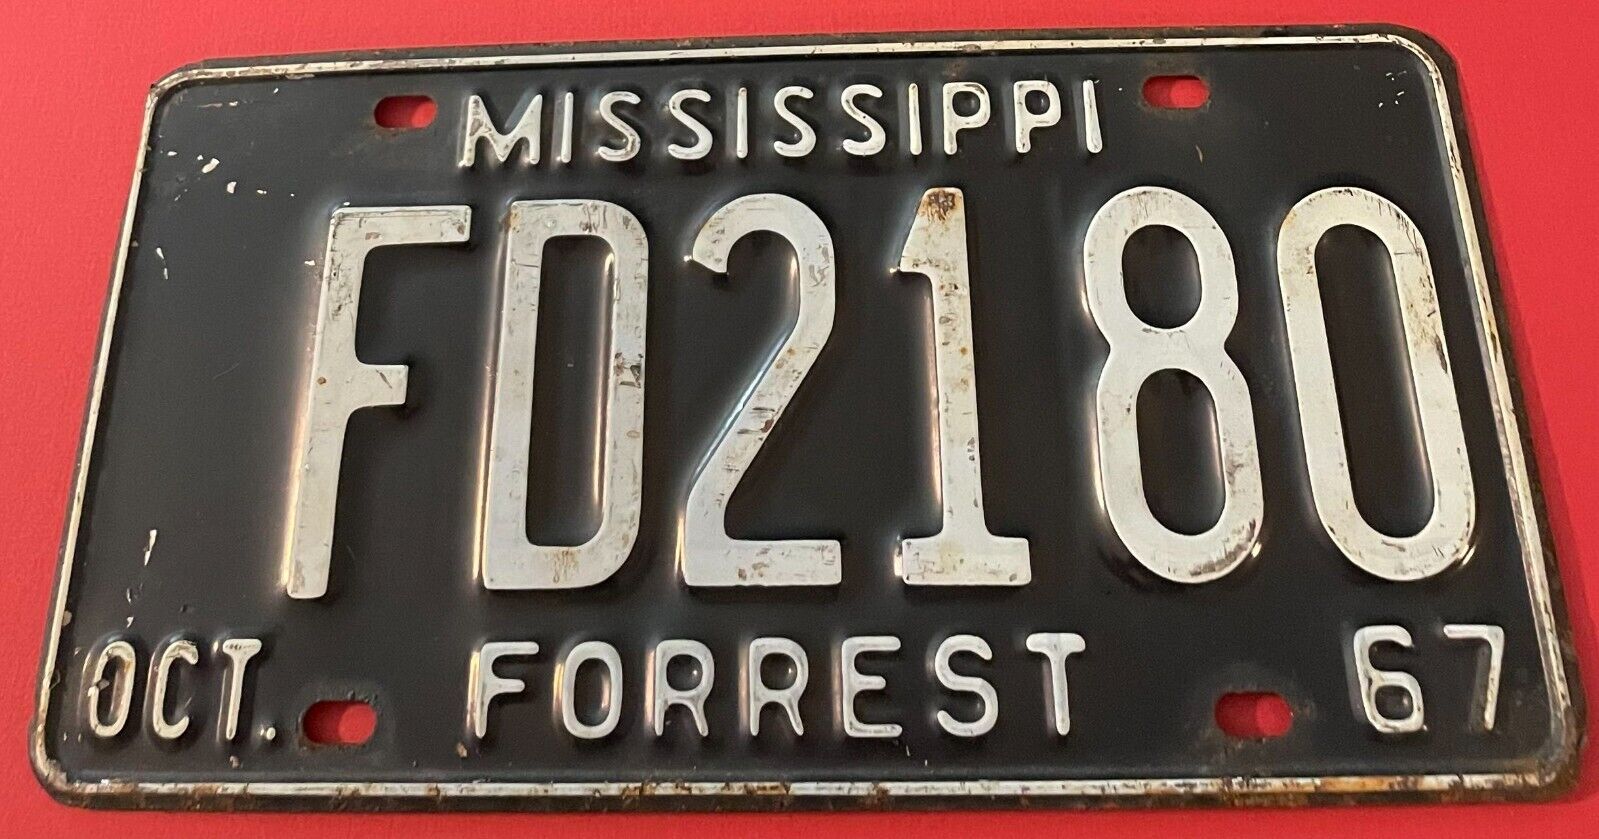 1967 Mississippi License Plate FD2180 Forrest County Hattiesburg Petal Glendale